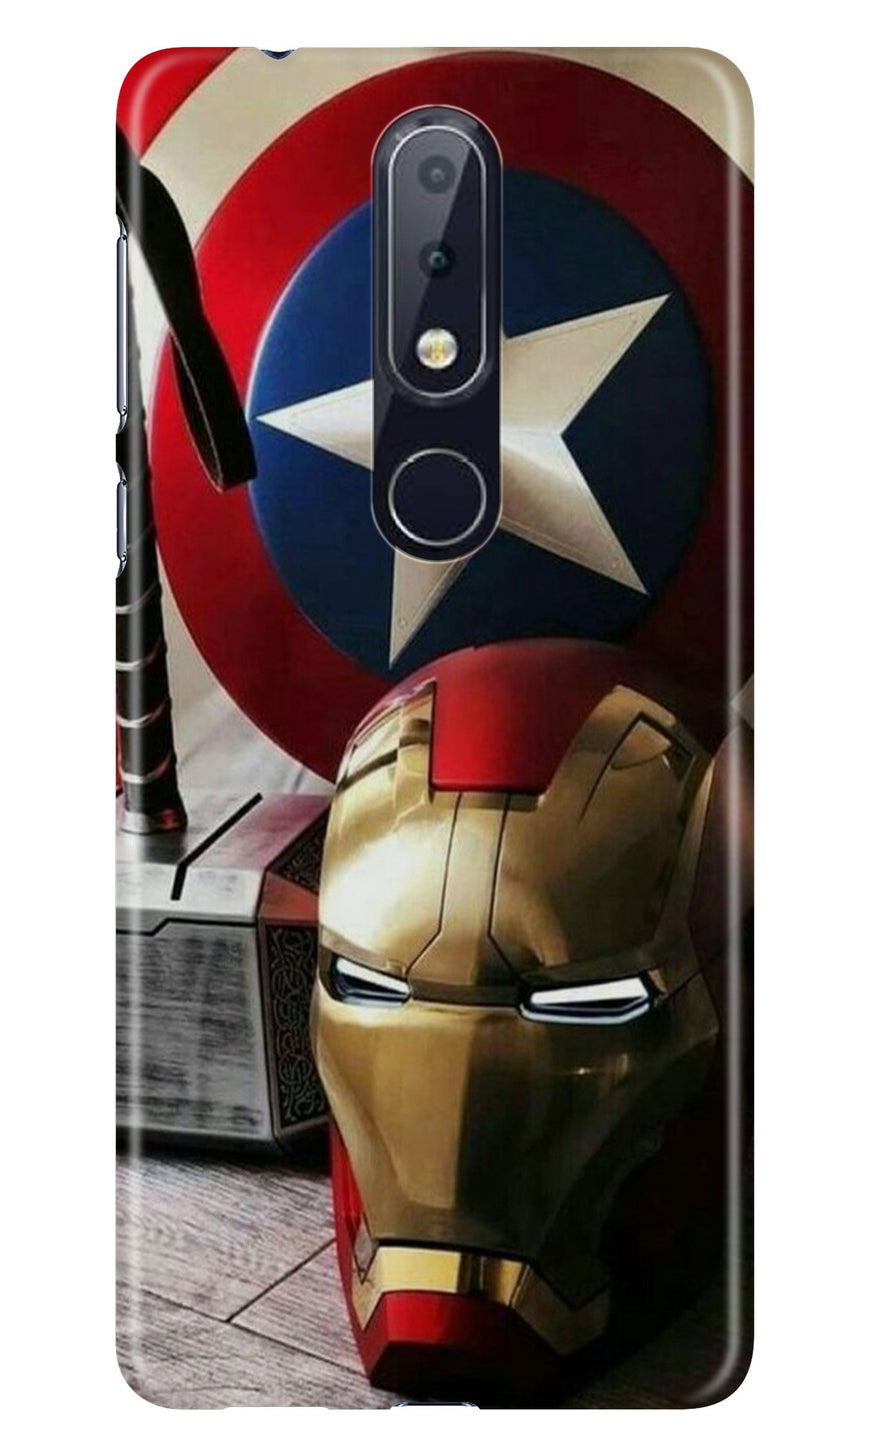 Ironman Captain America Case for Nokia 6.1 Plus (Design No. 254)